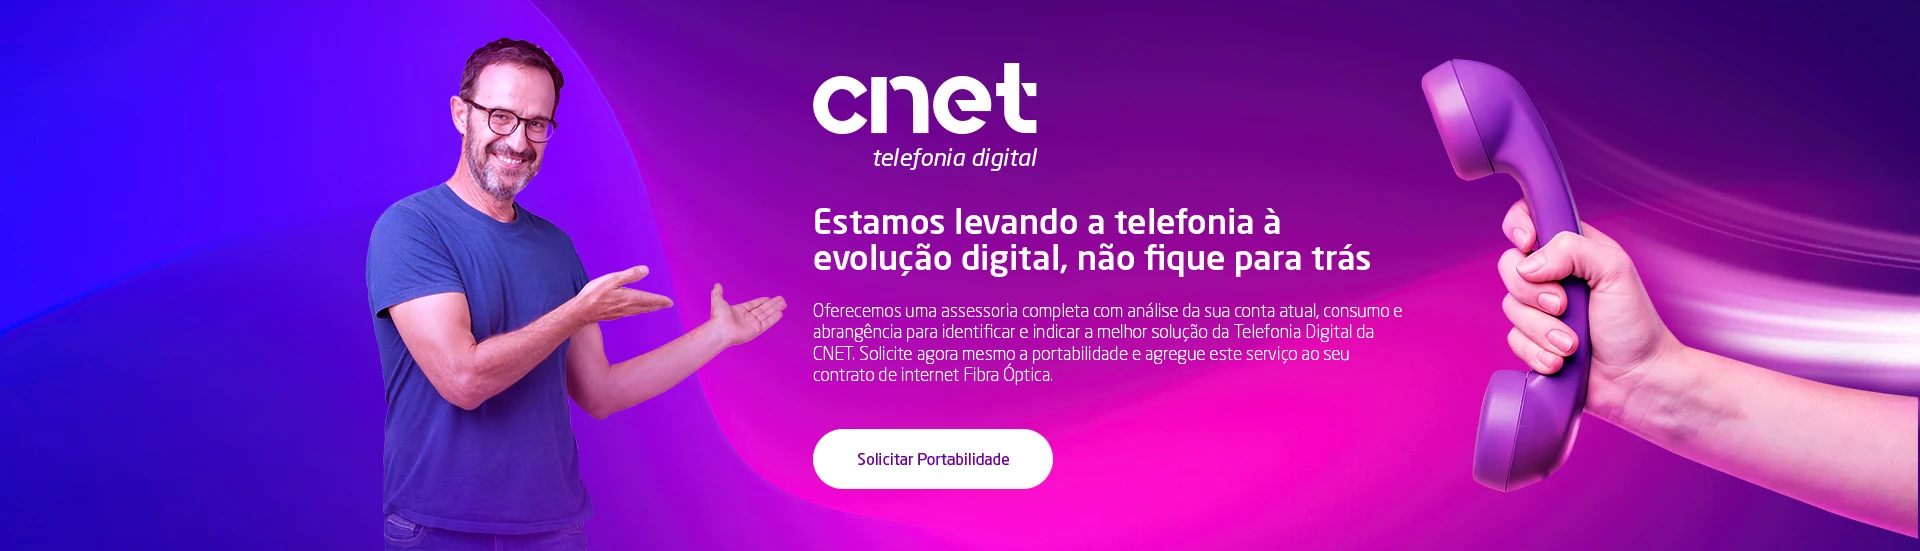 CNET - Telefonia Residencial